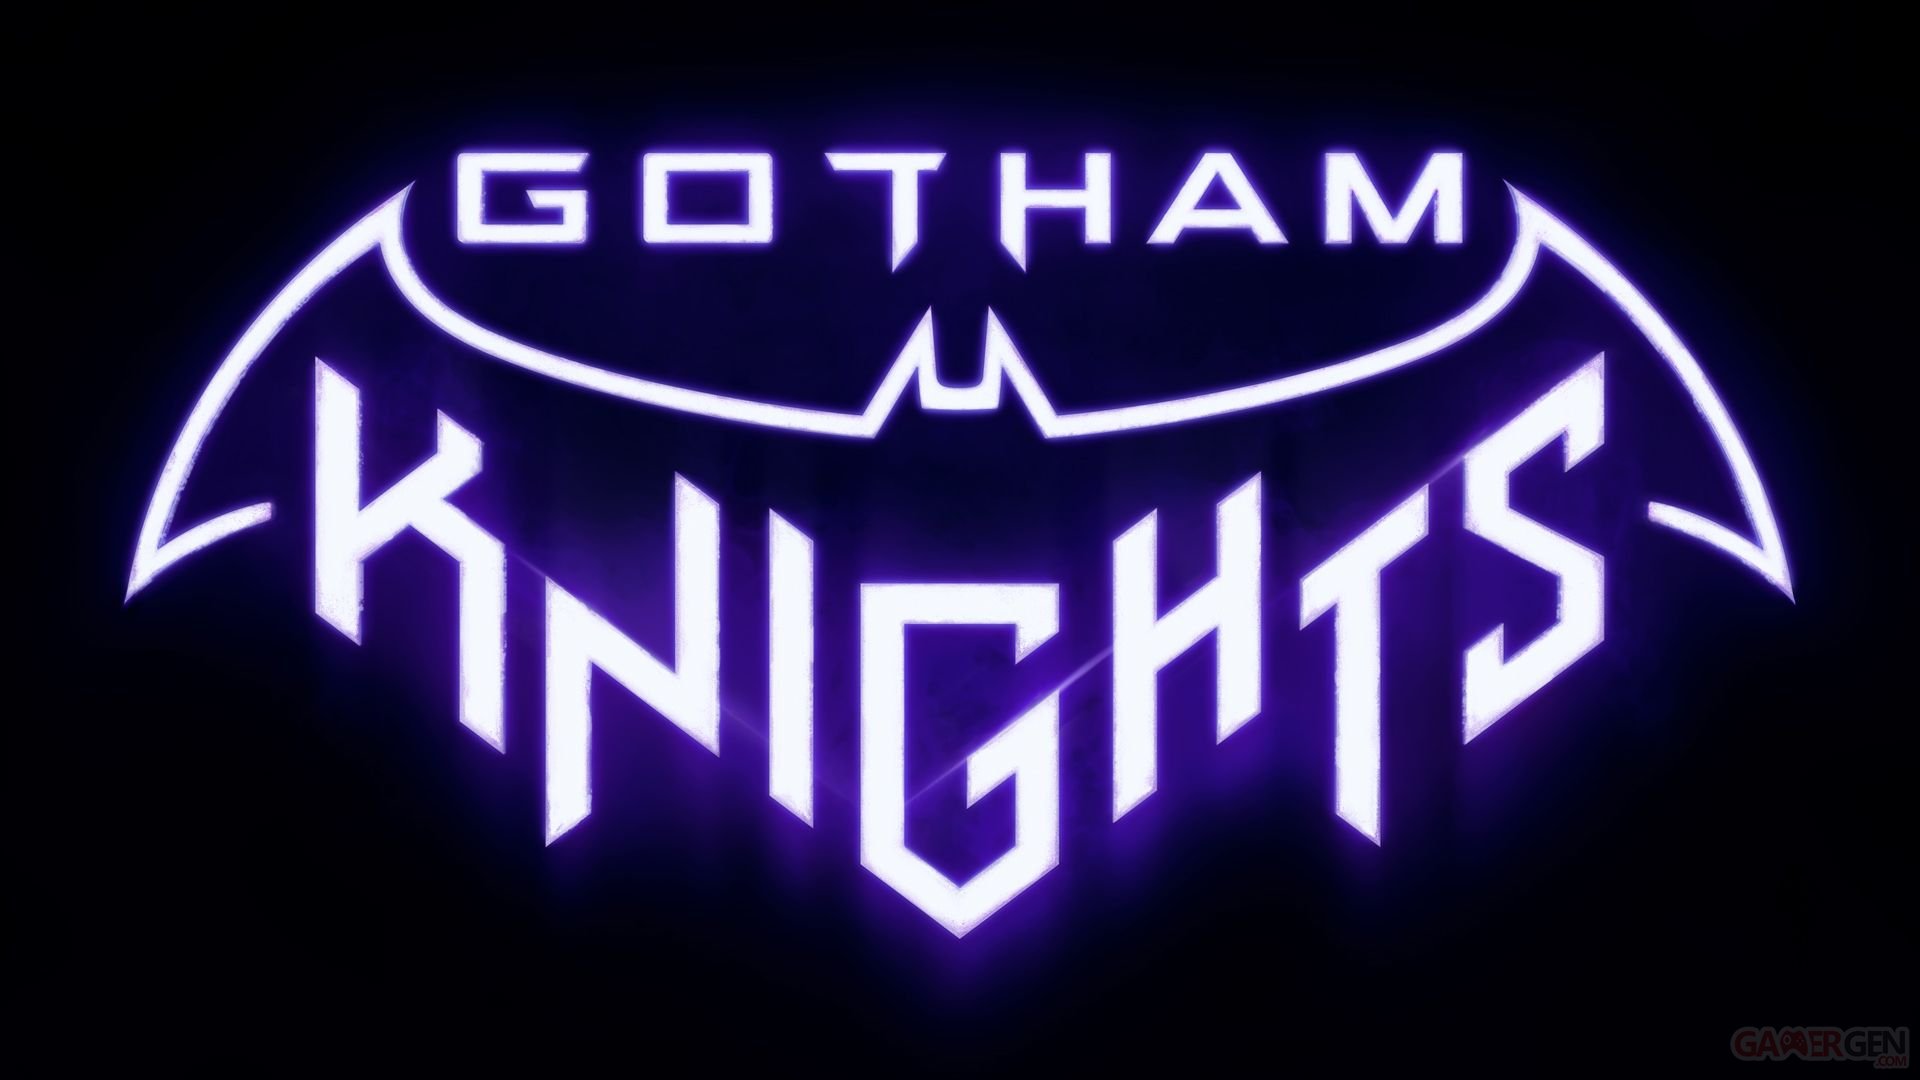 download cw gotham knights